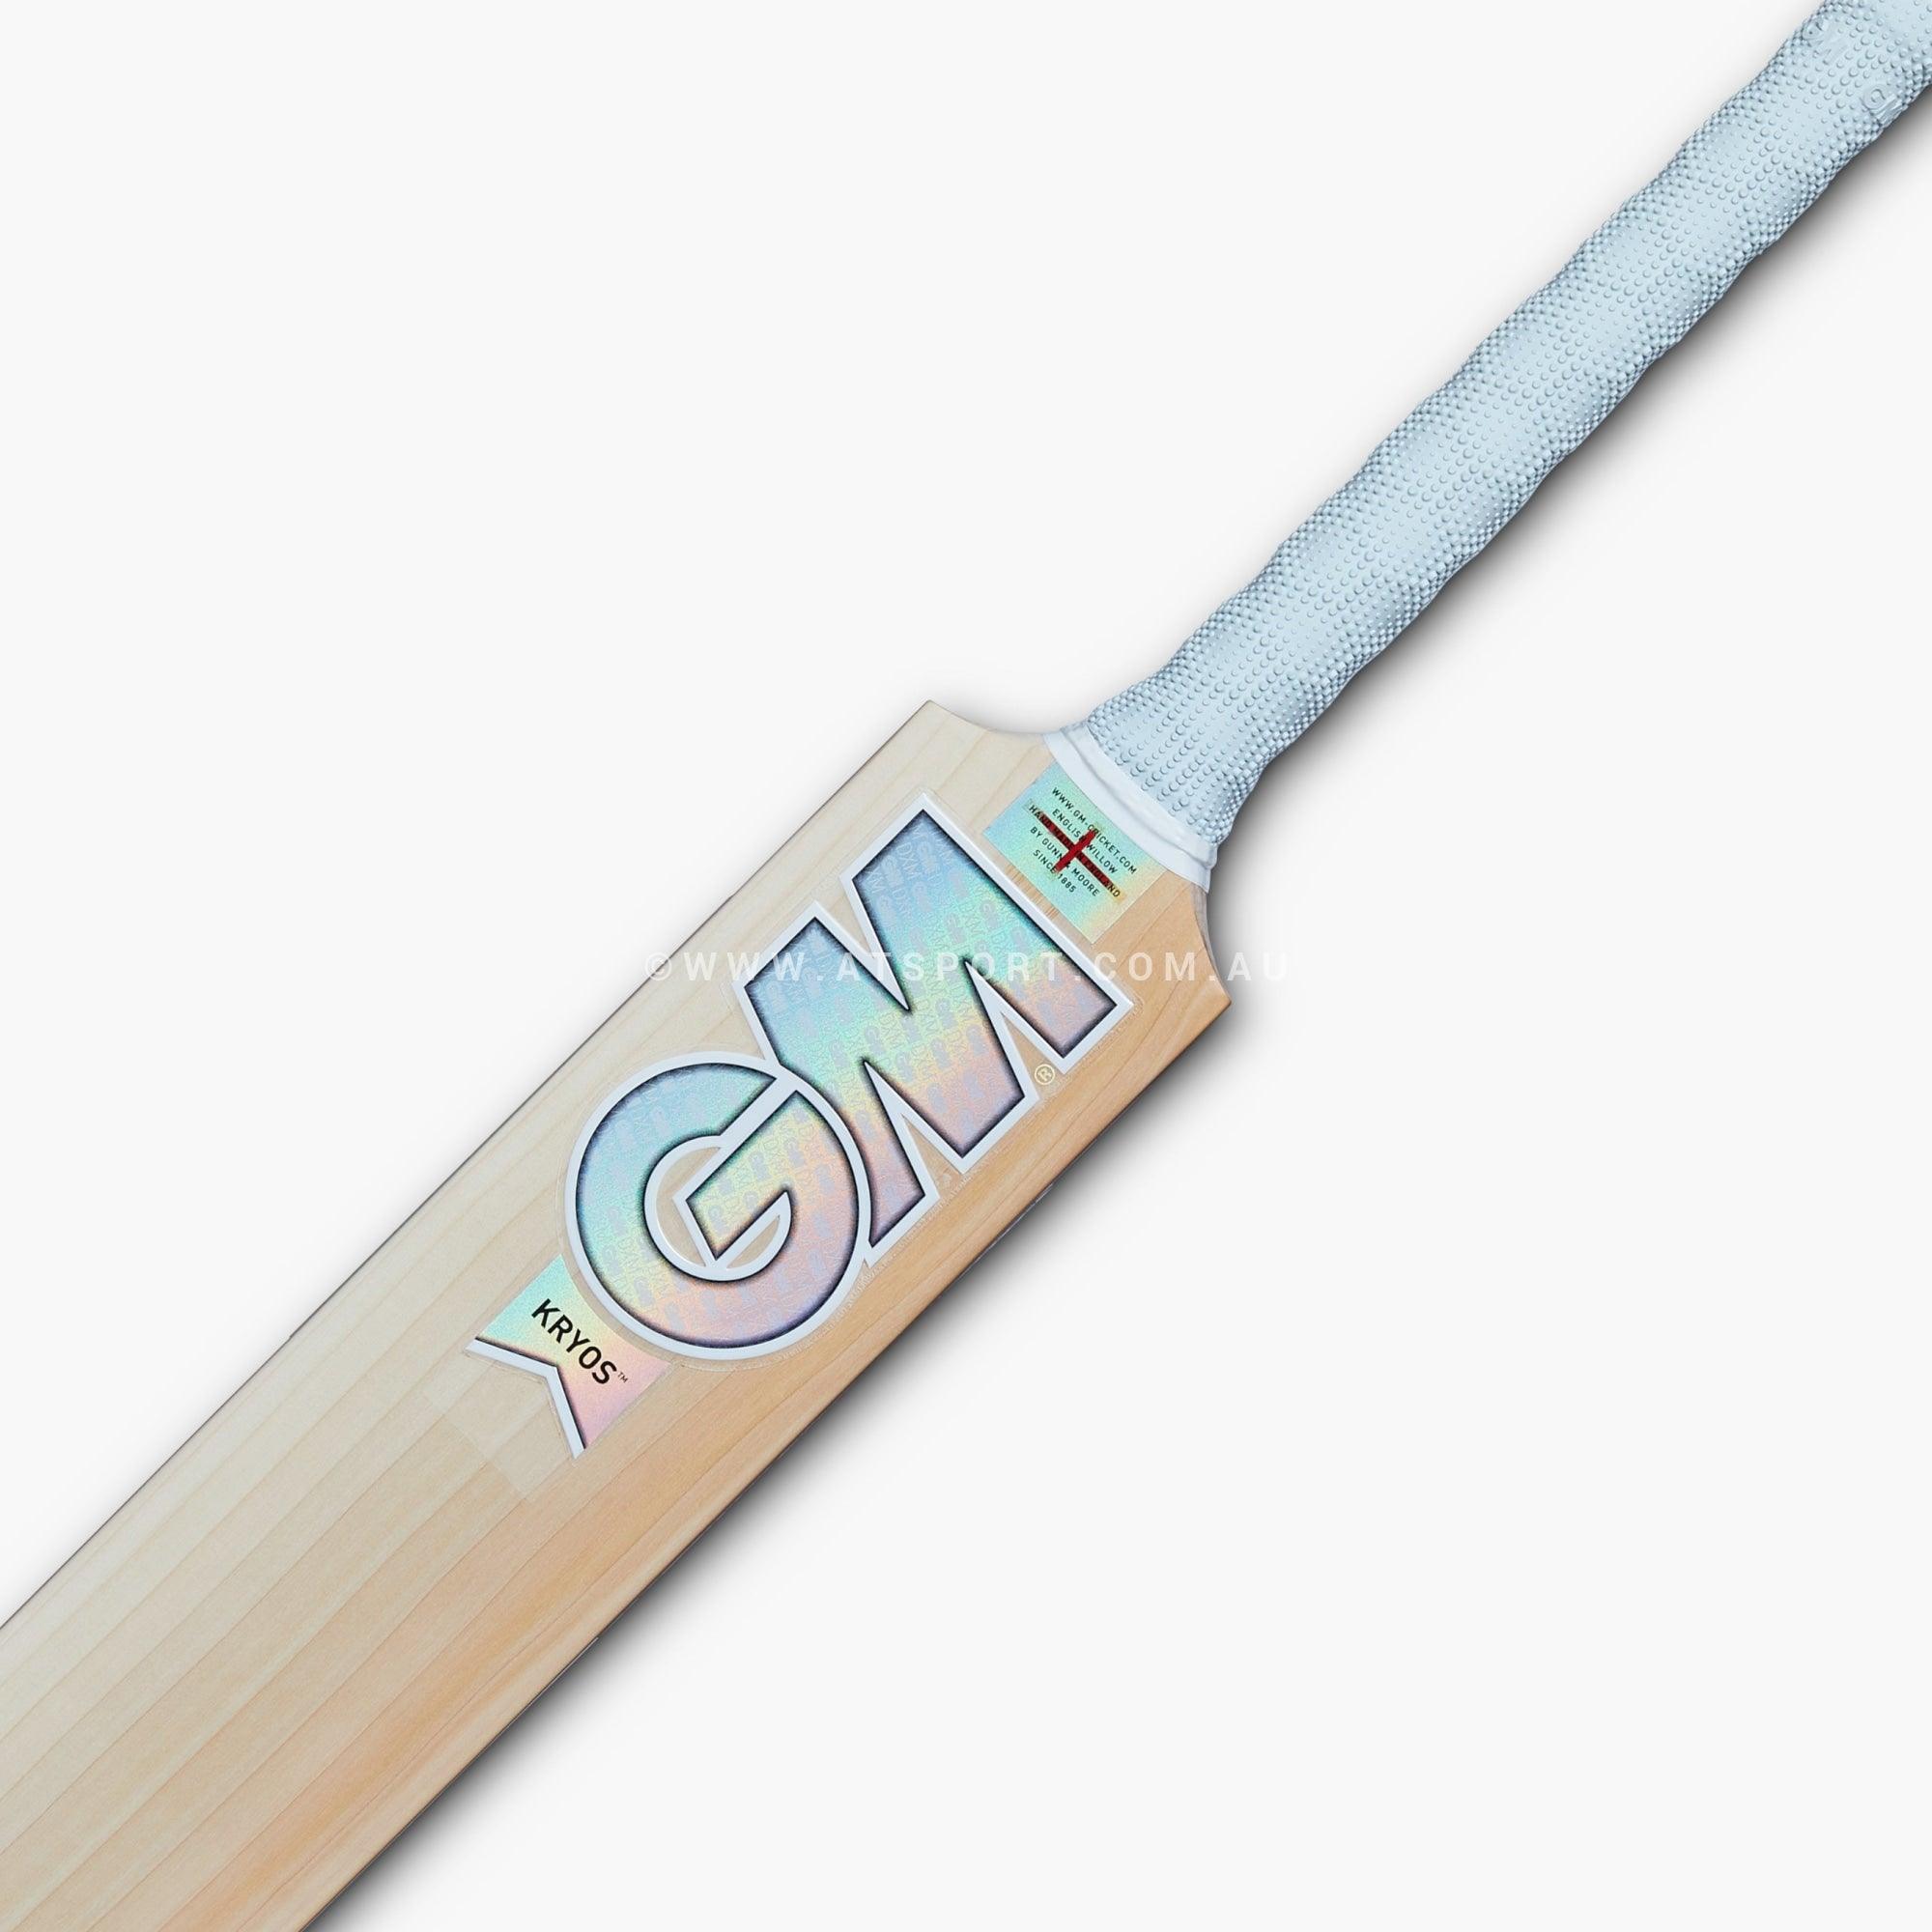 Gm Kryos 404 Dxm Ttnow L540 English Willow Cricket Bat - Sh Grade 3